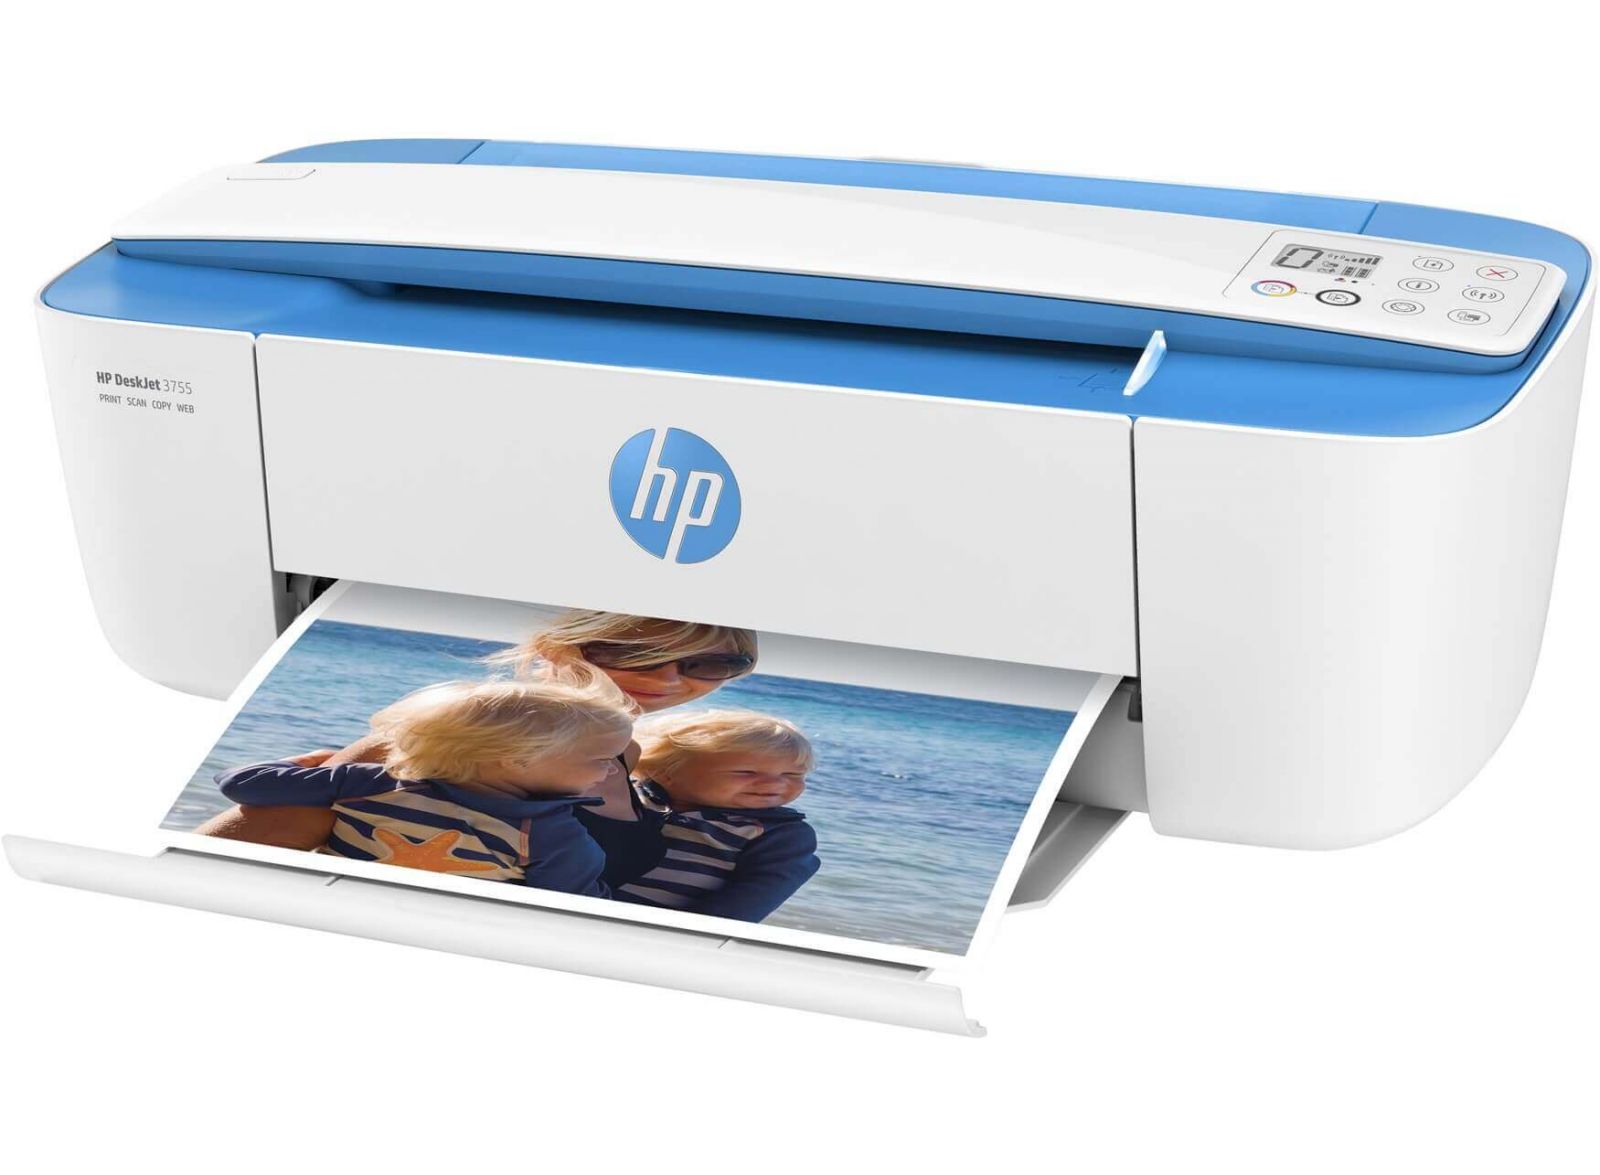 Máy in phun màu HP DeskJet 3755 (J9V90A)